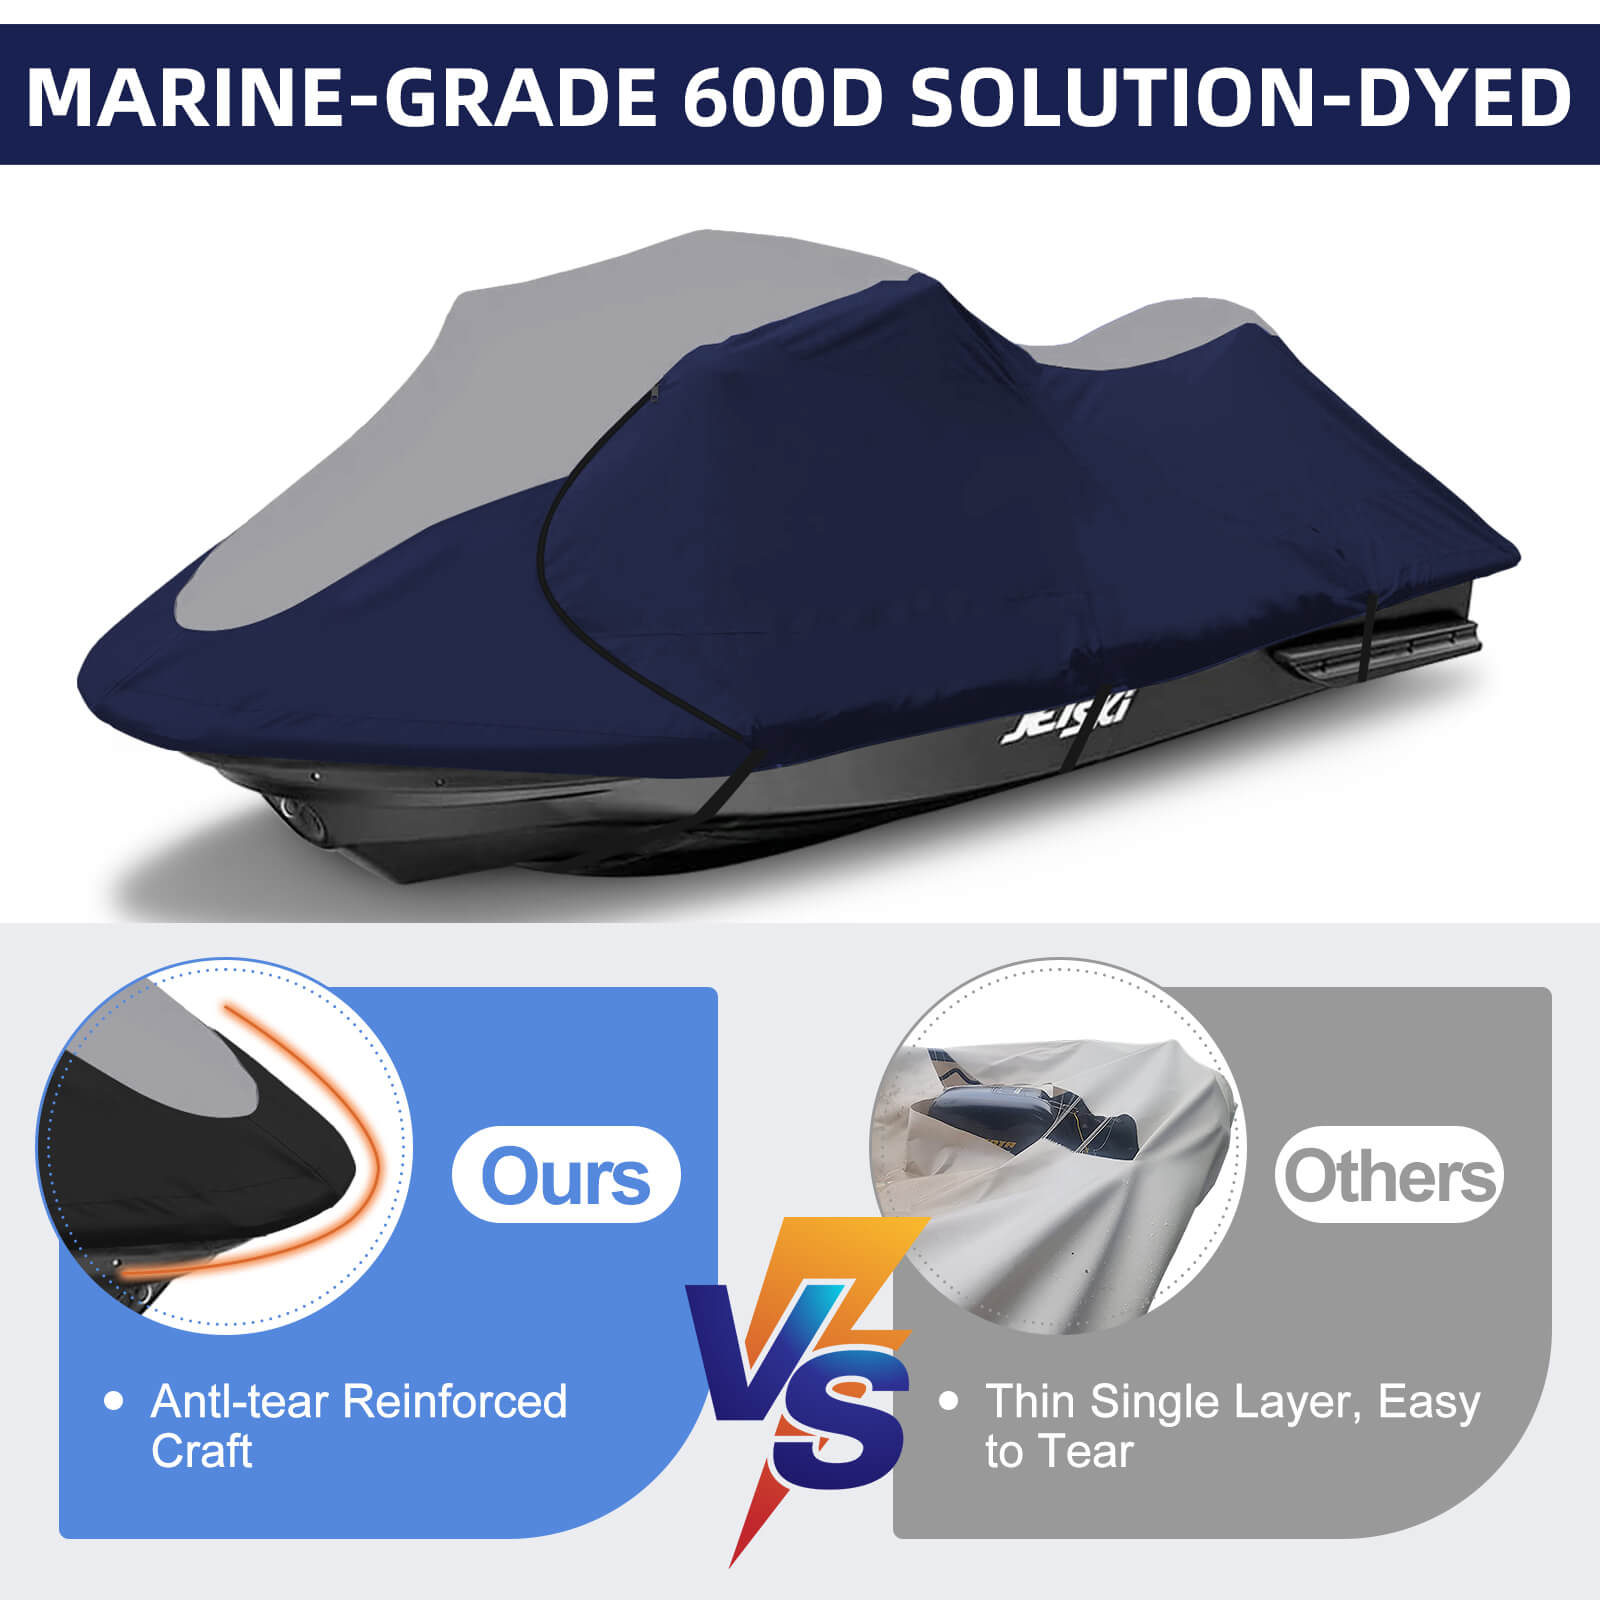 Jet Ski Cover - marine-grade 600D solution -dyed